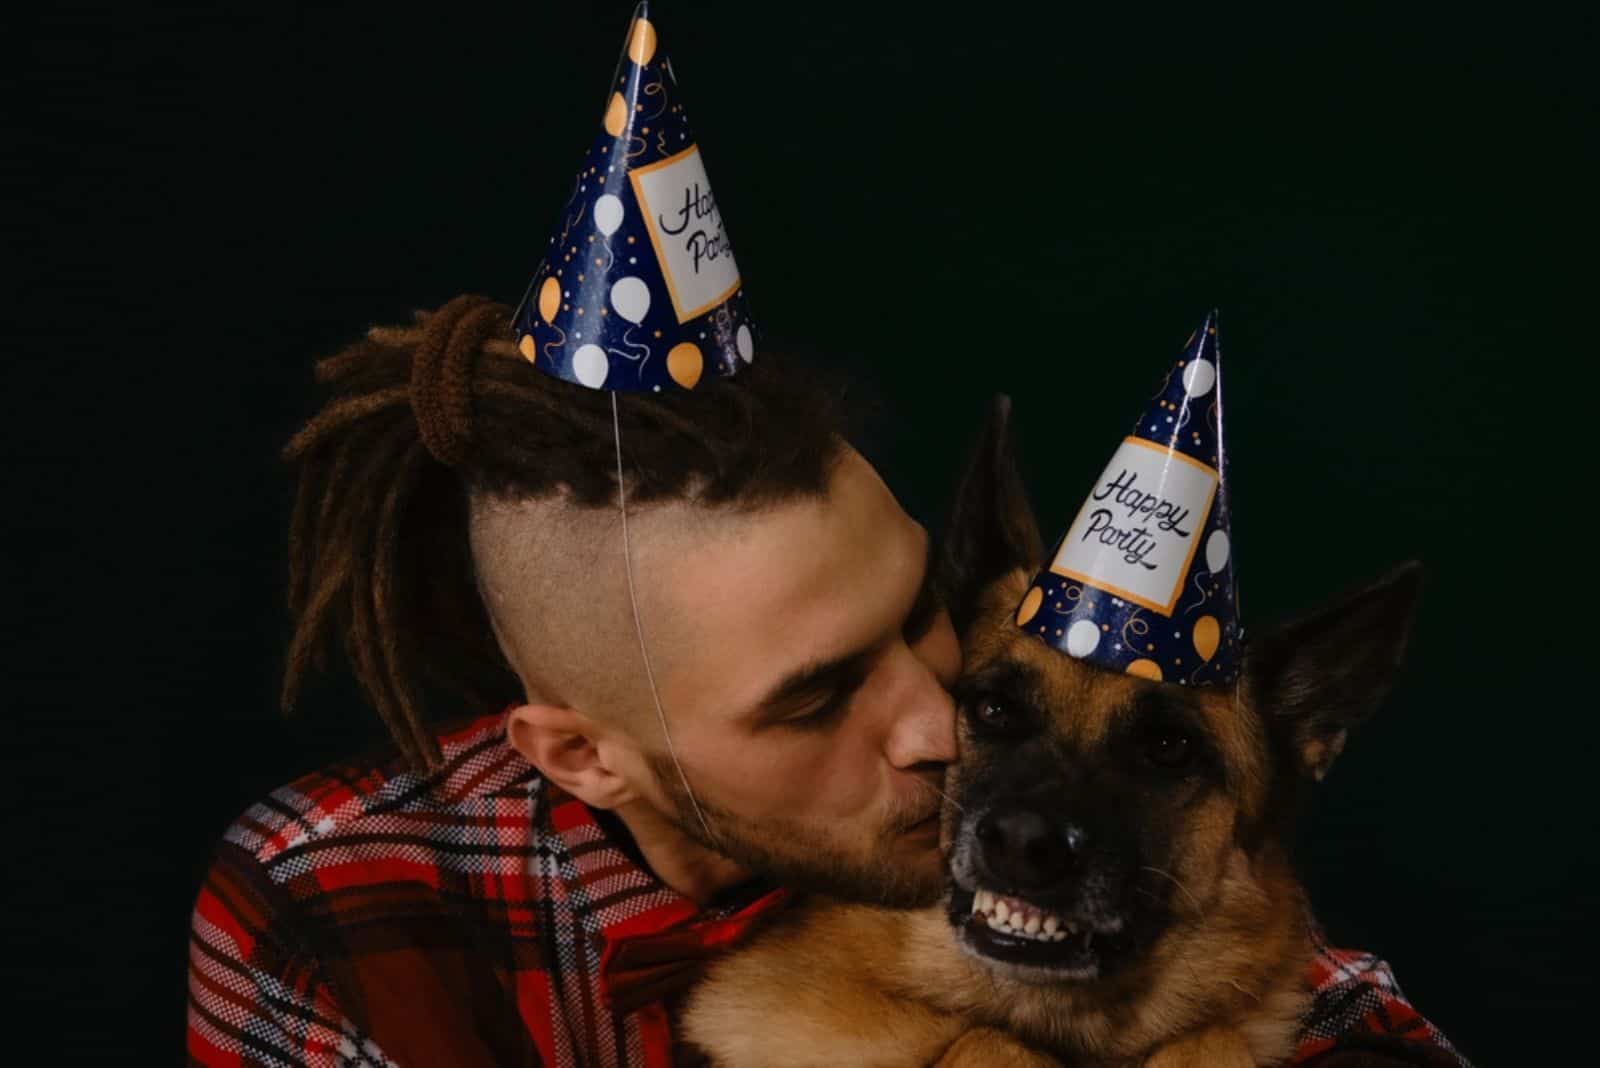 man kissing and hugging german shepherd dog while celebrating together some event